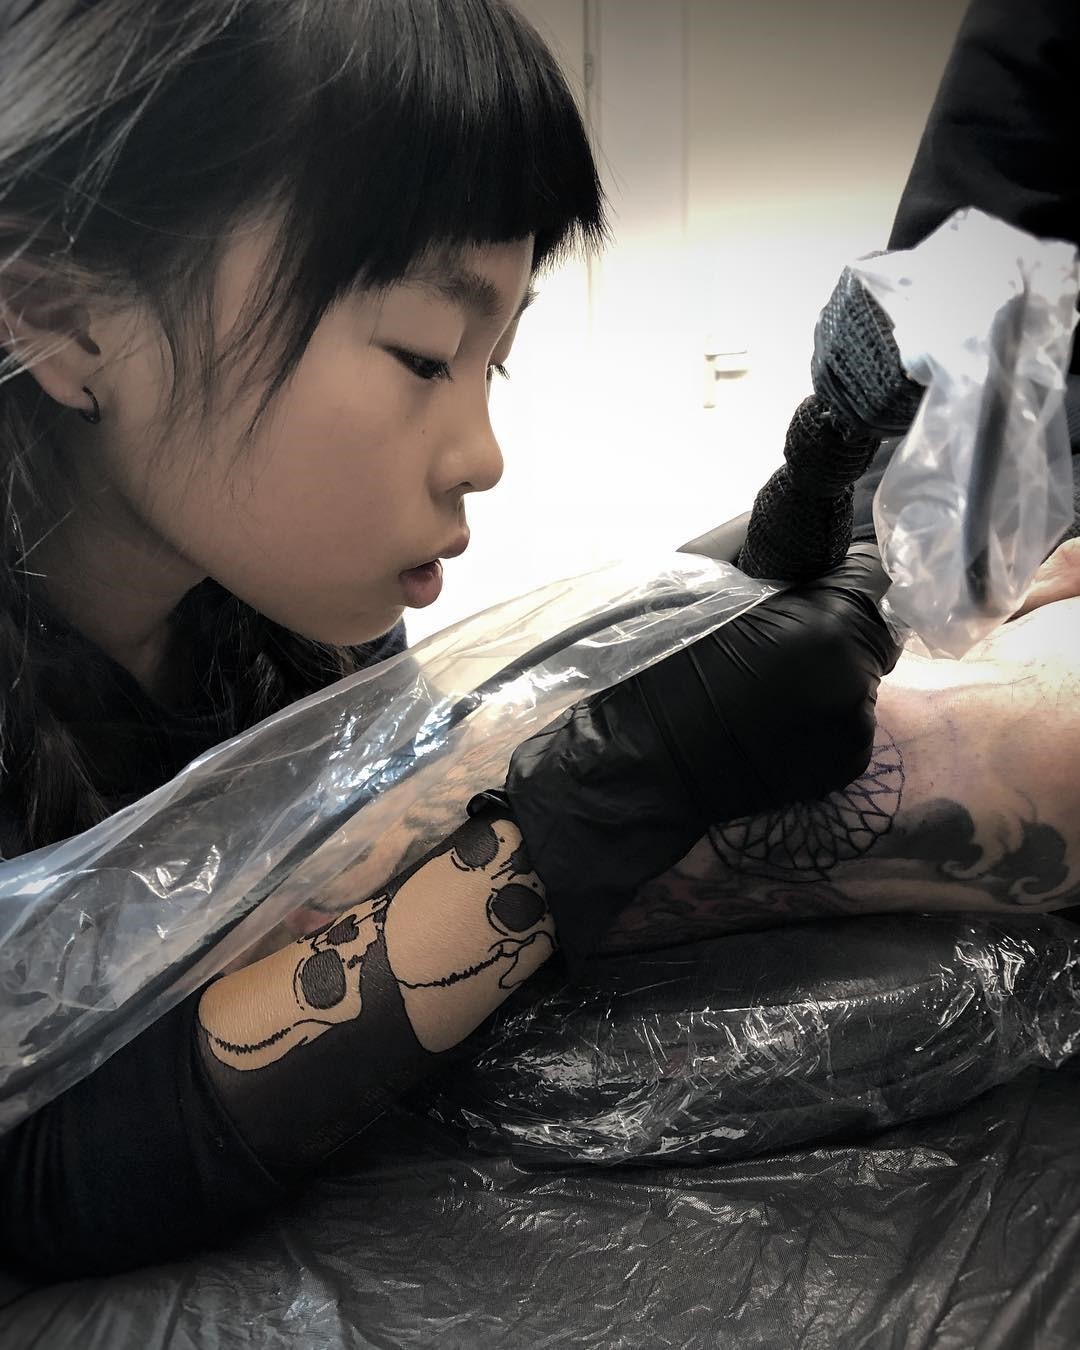 Meet Noko, Japan's 10-year-old tattoo artist | Dazed